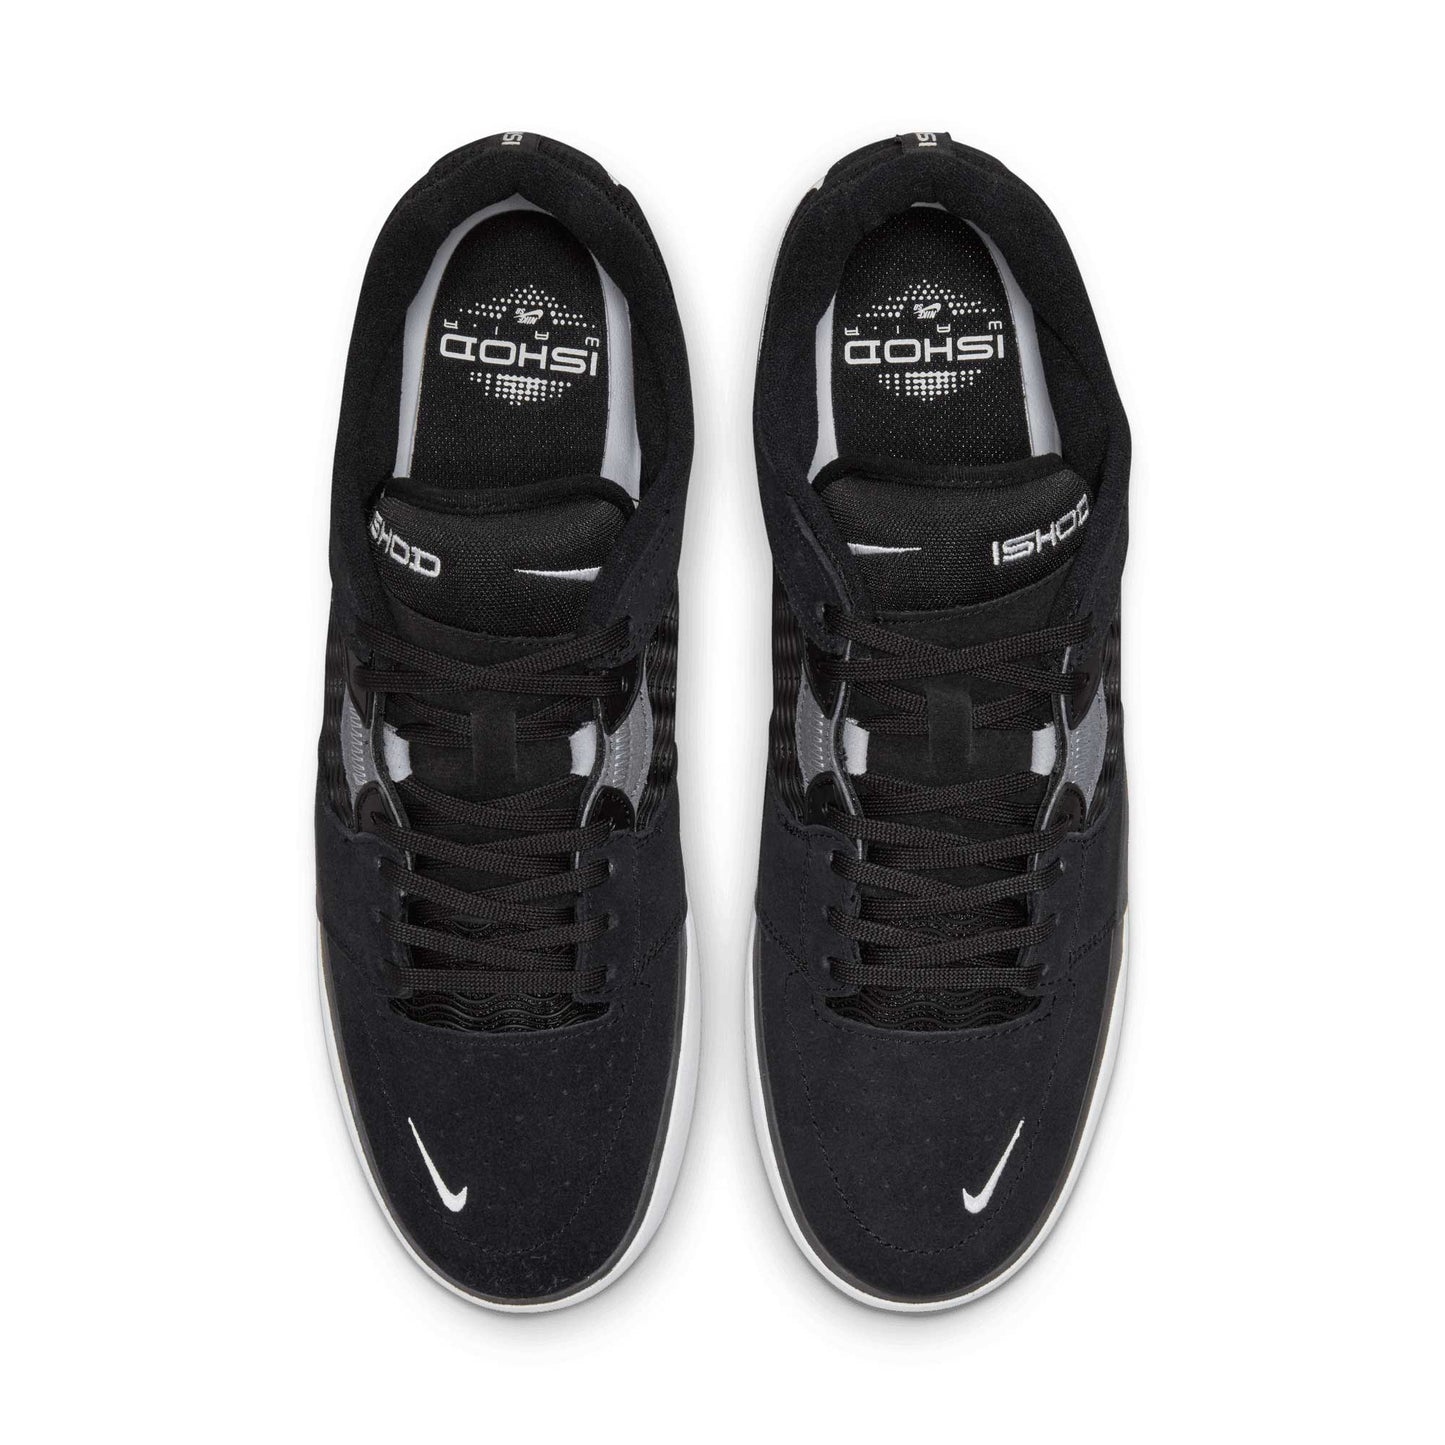 Nike SB Ishod Wair, black/white-dark grey-black - Tiki Room Skateboards - 3